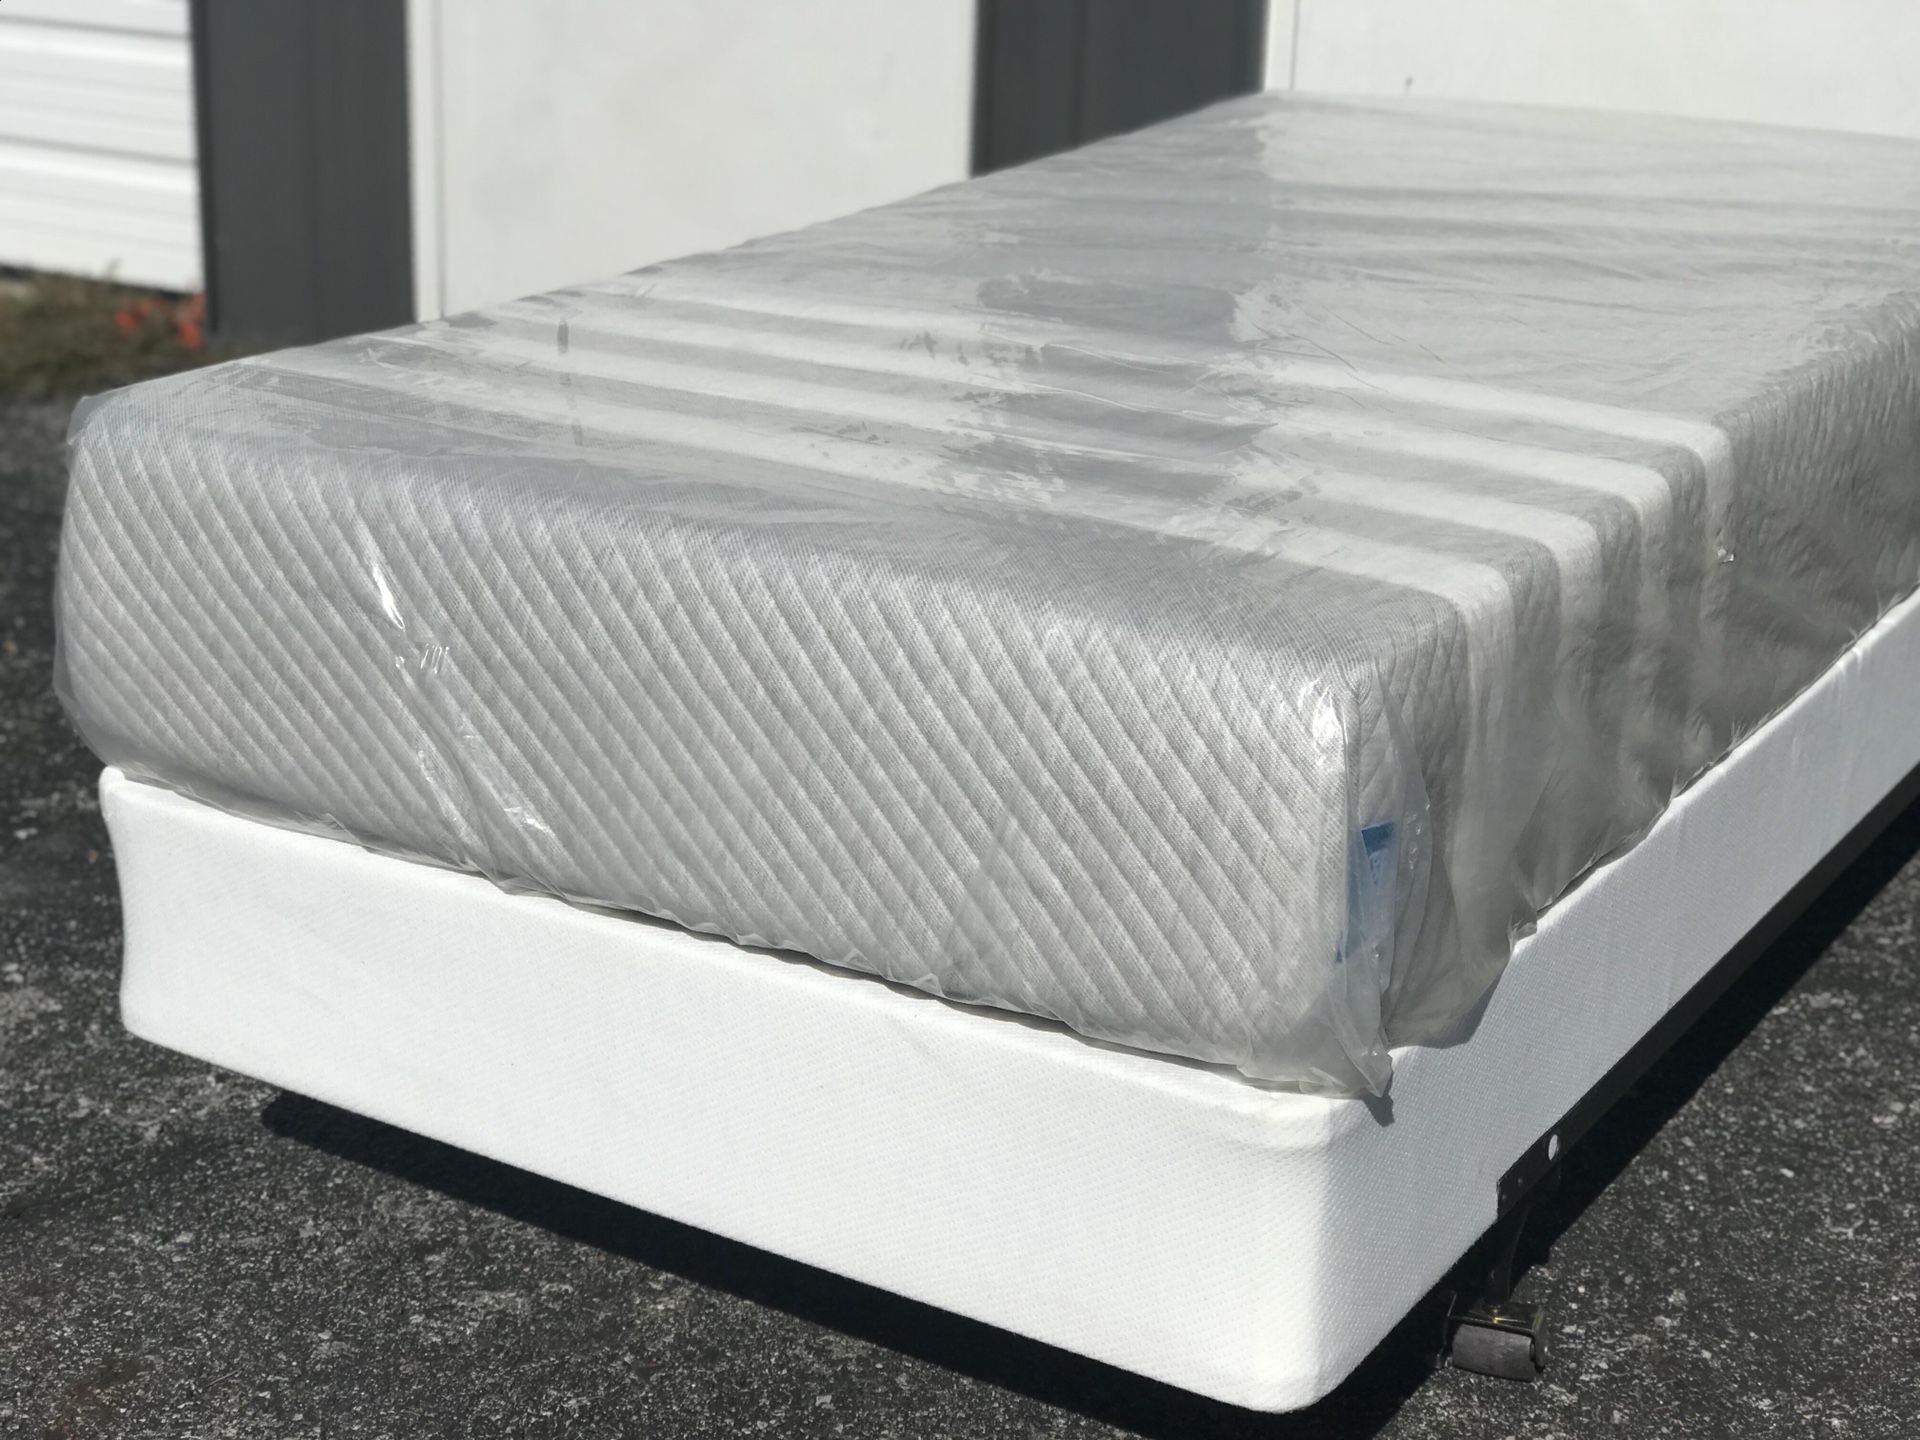 New leesa TWIN memory foam mattress $250 or $290 with box spring